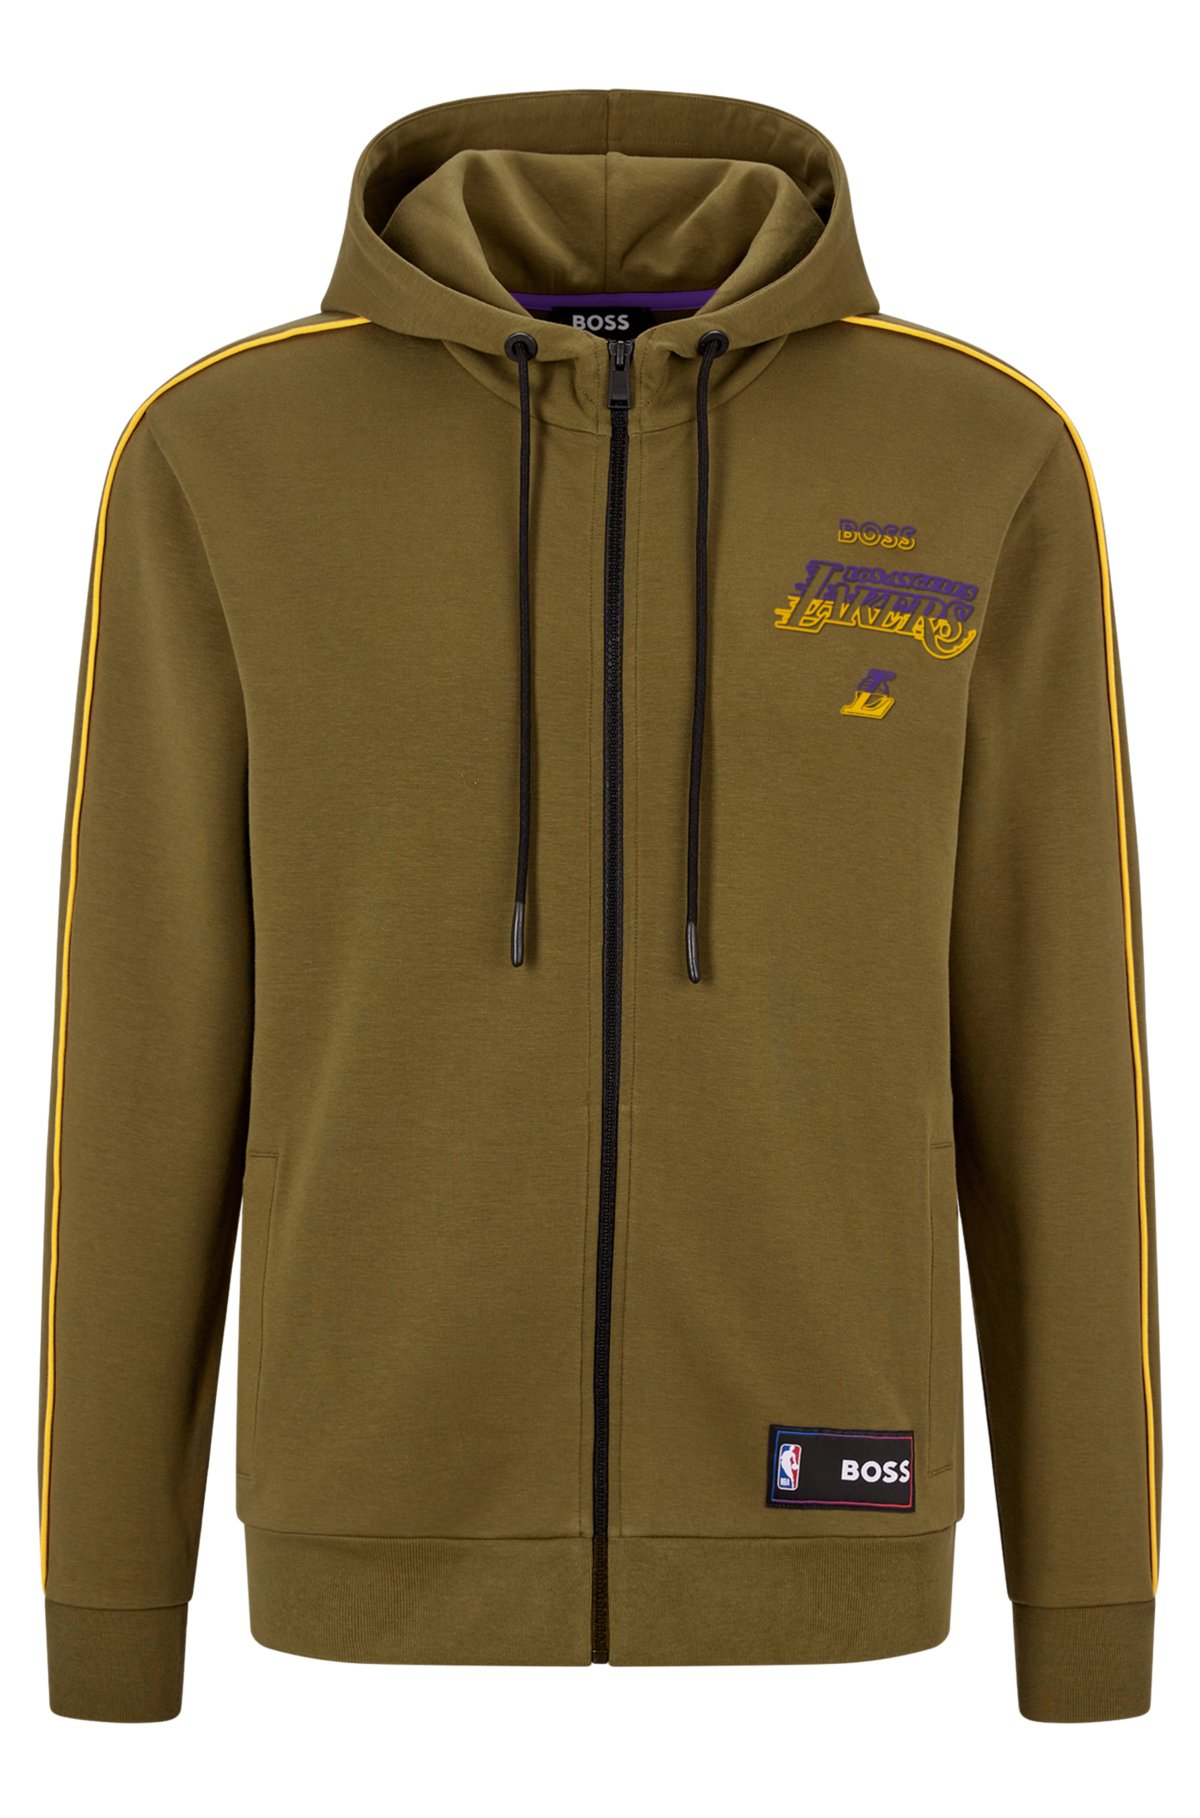 Hugo Boss, Sweaters, Hugo Boss Lakers Sweatshirt